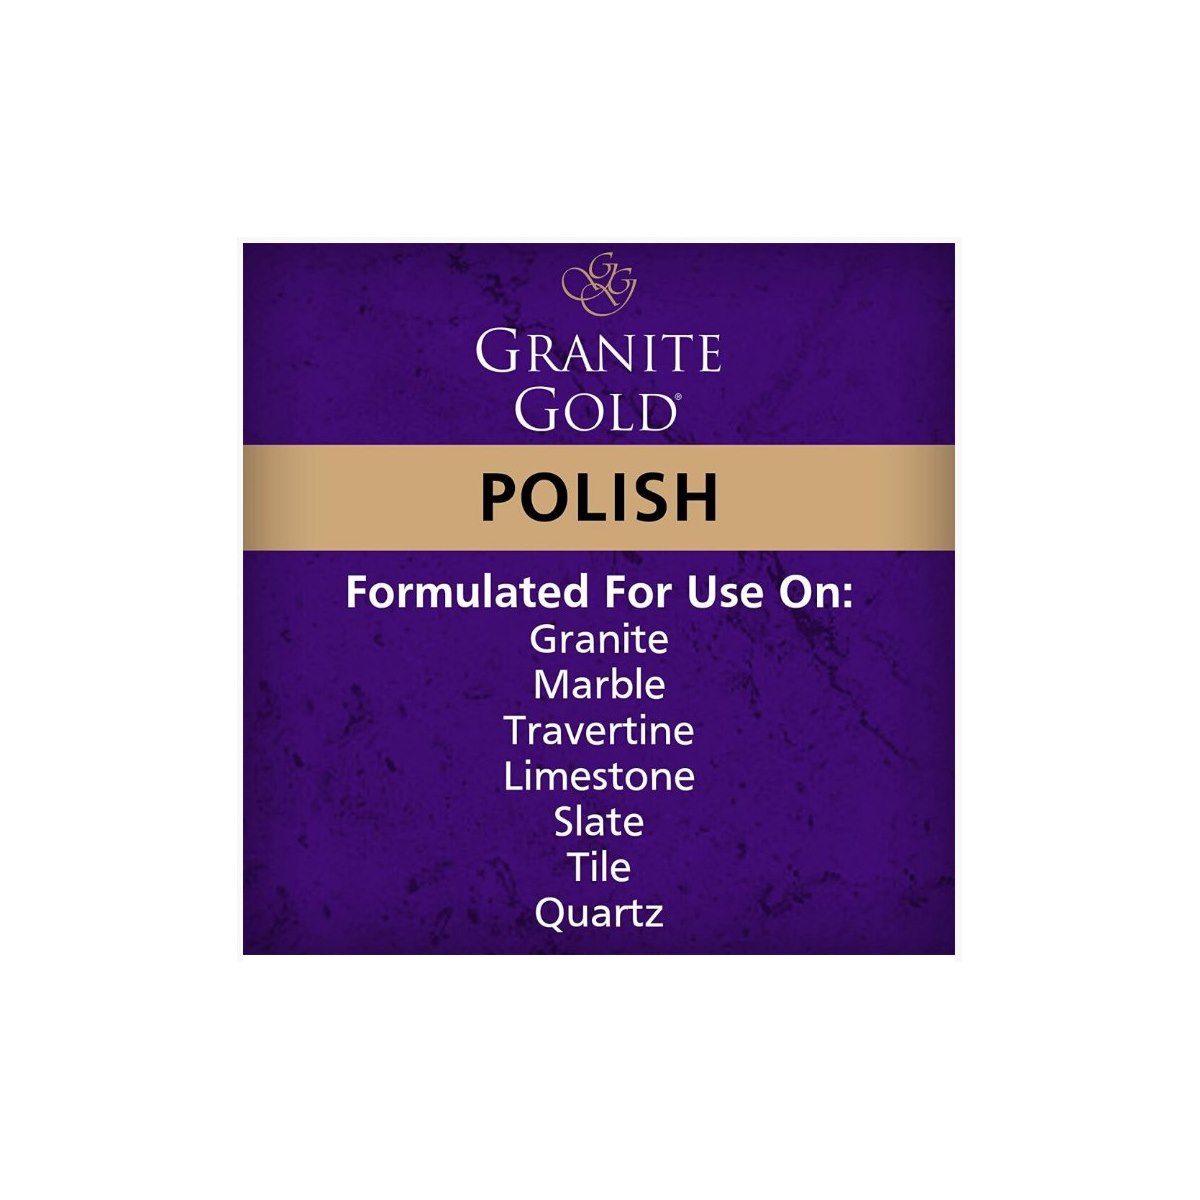 Where to use Granite Gold Polish Spray